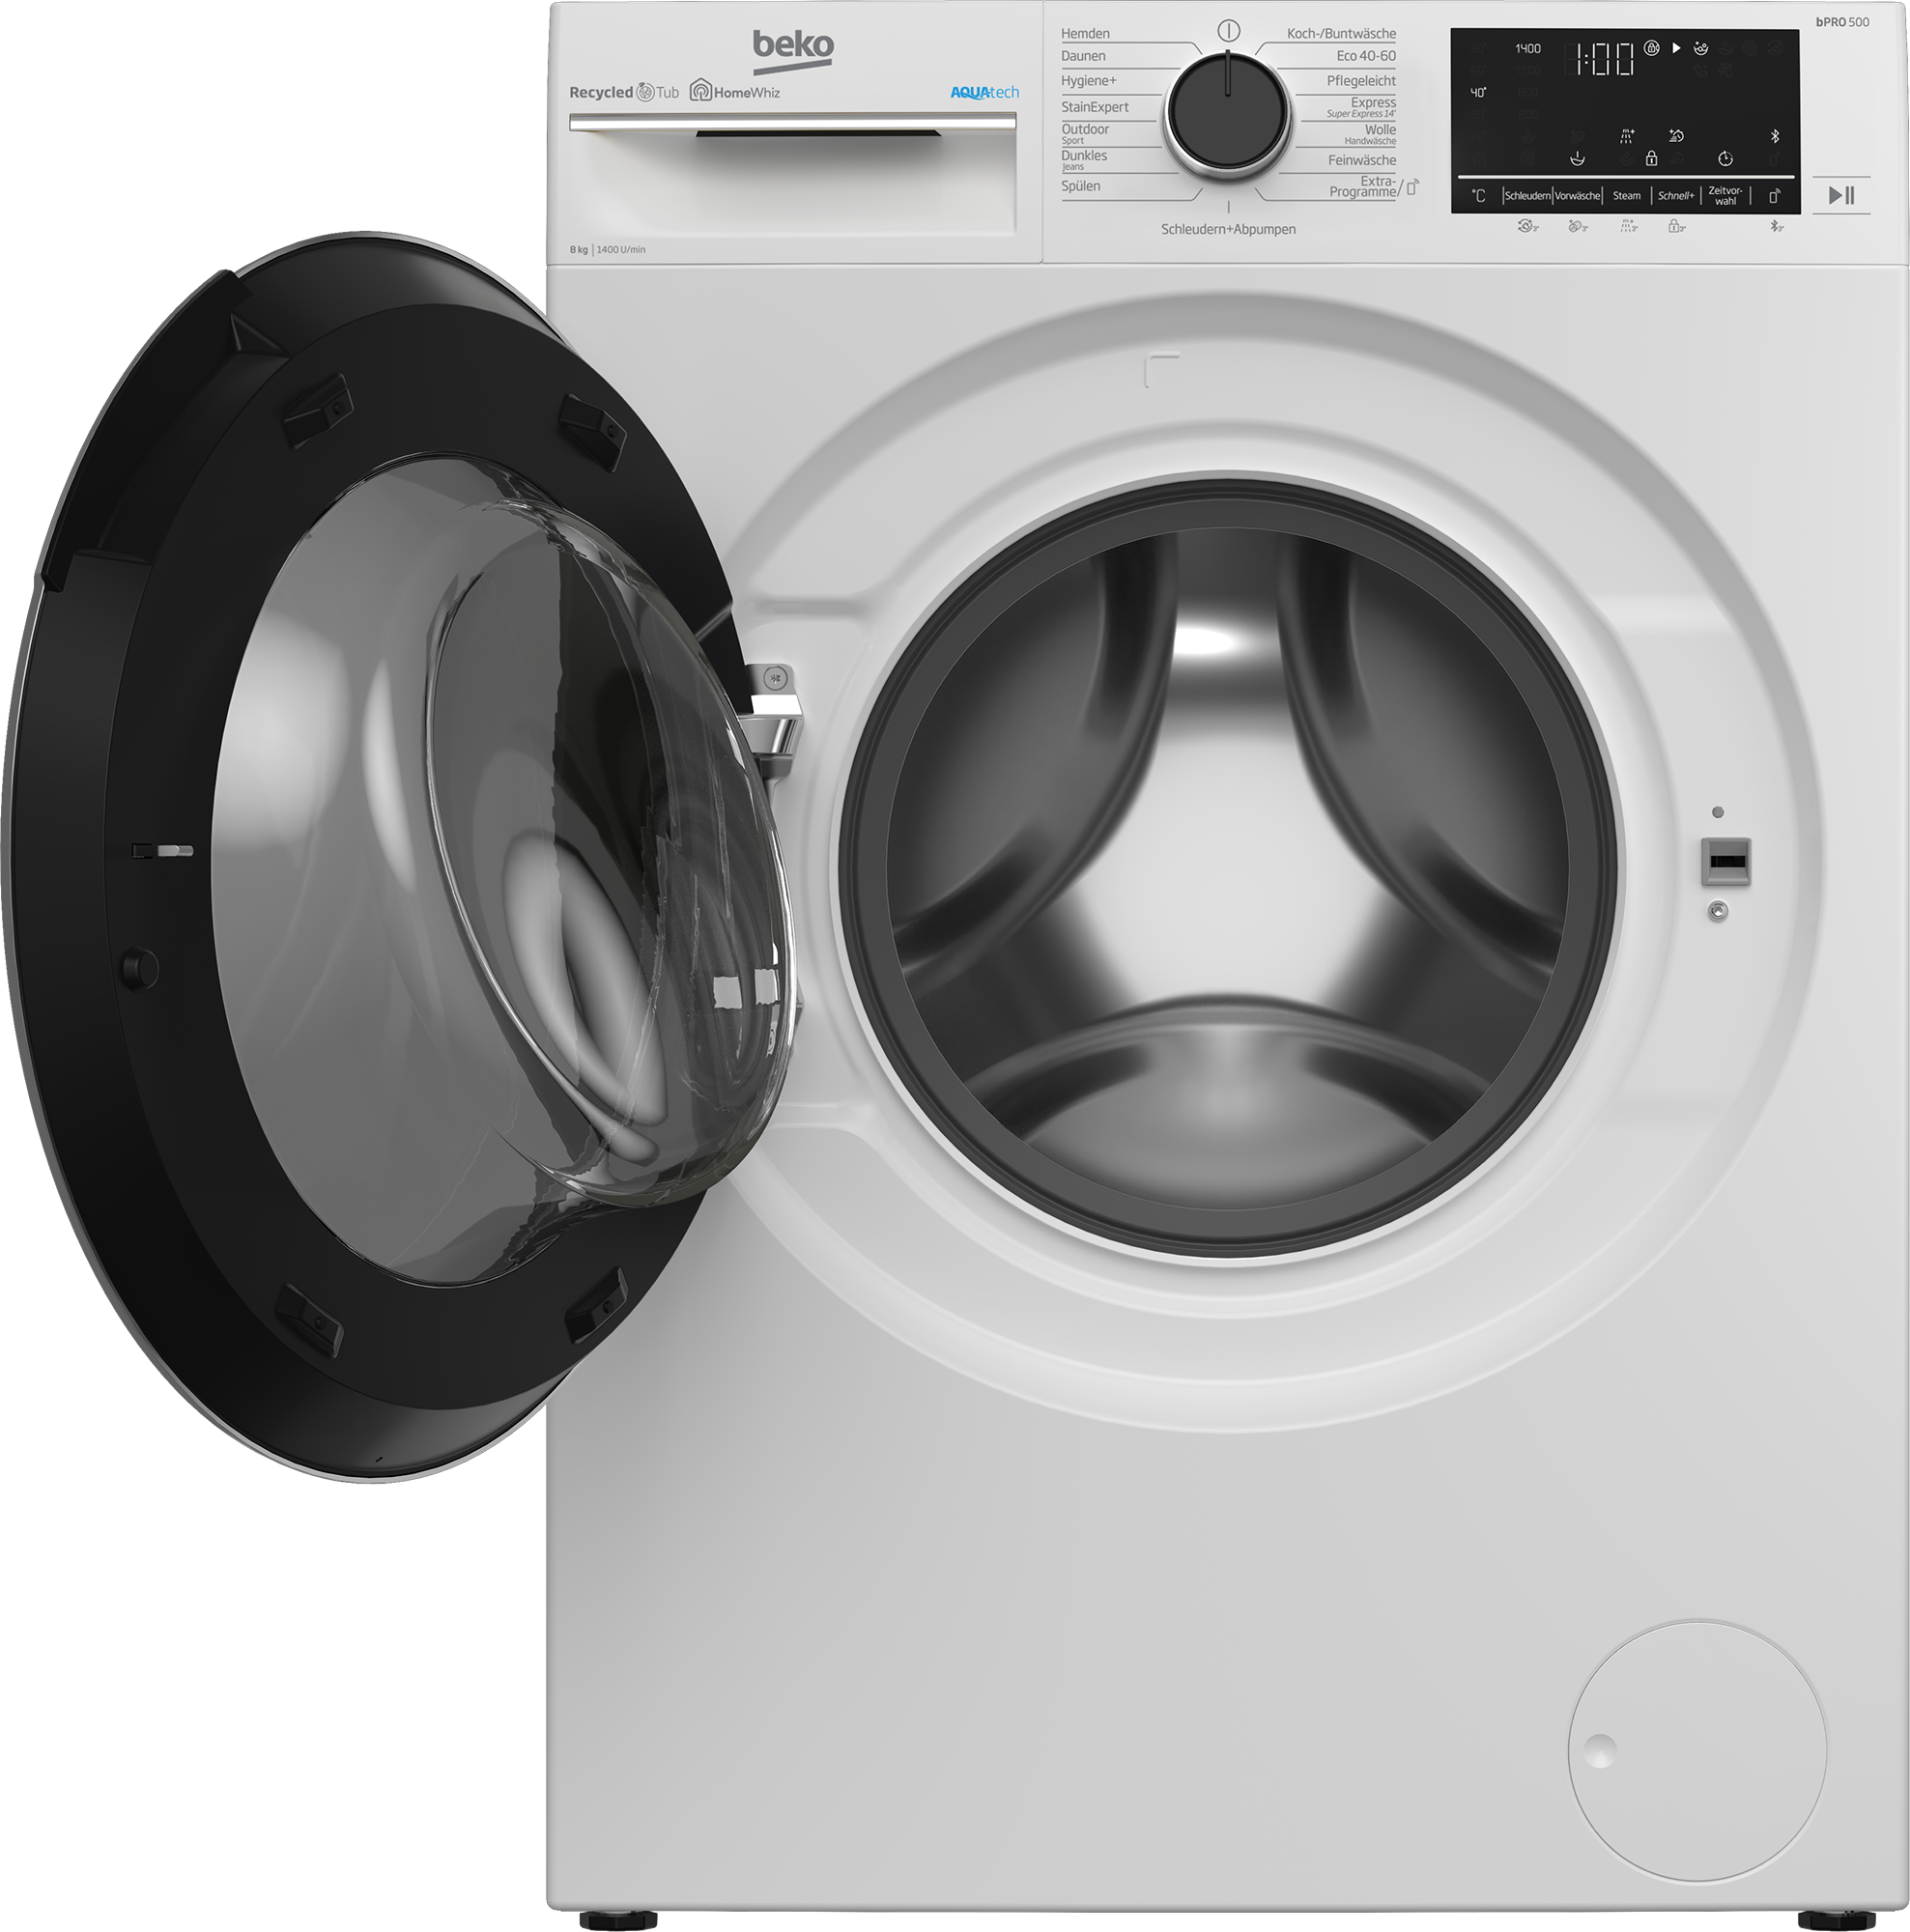 B5WFU58418W | Washing (8 | Machine 1400 rpm) kg, BEKO Freestanding